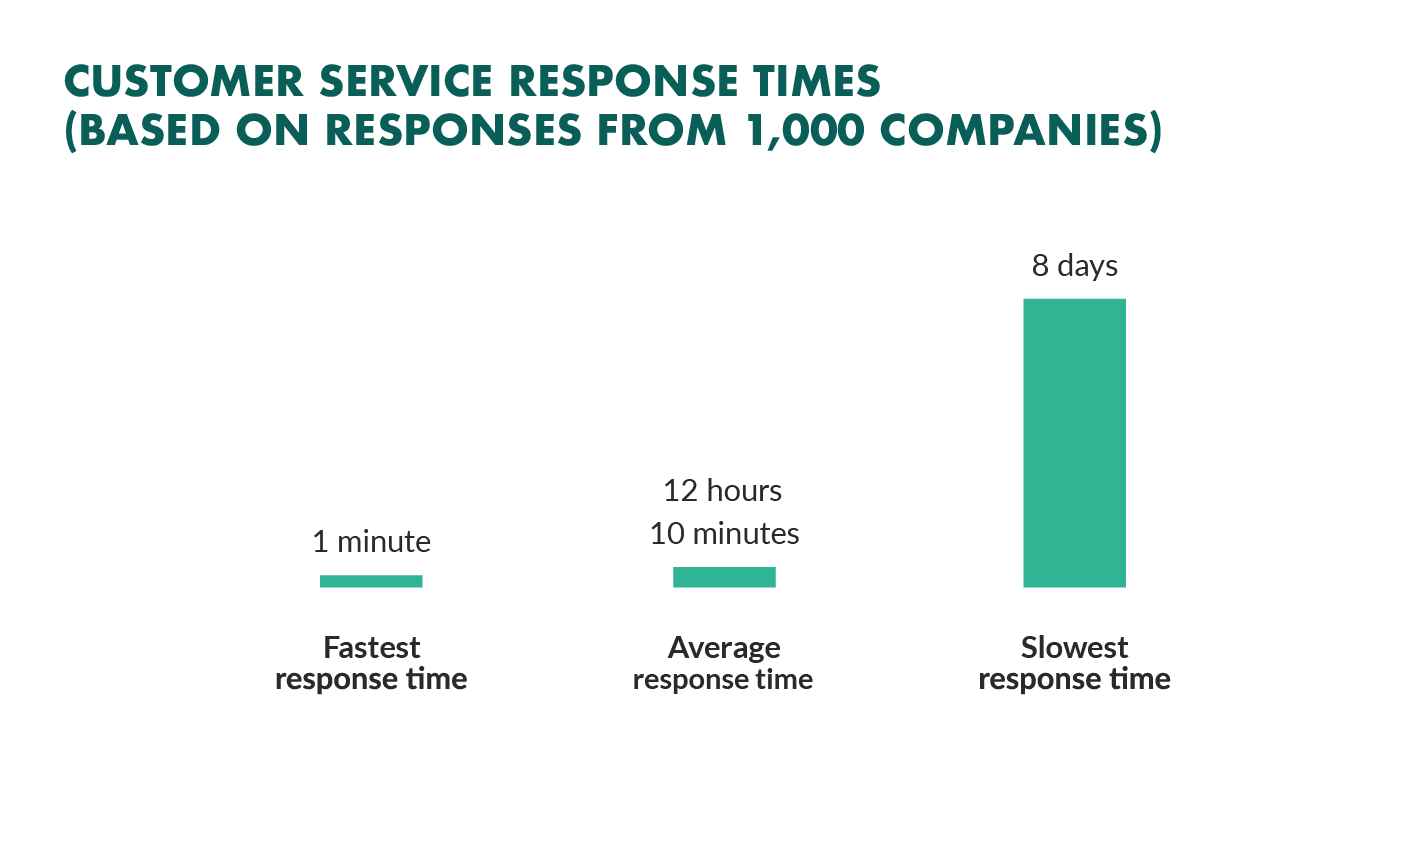 Customer service response times